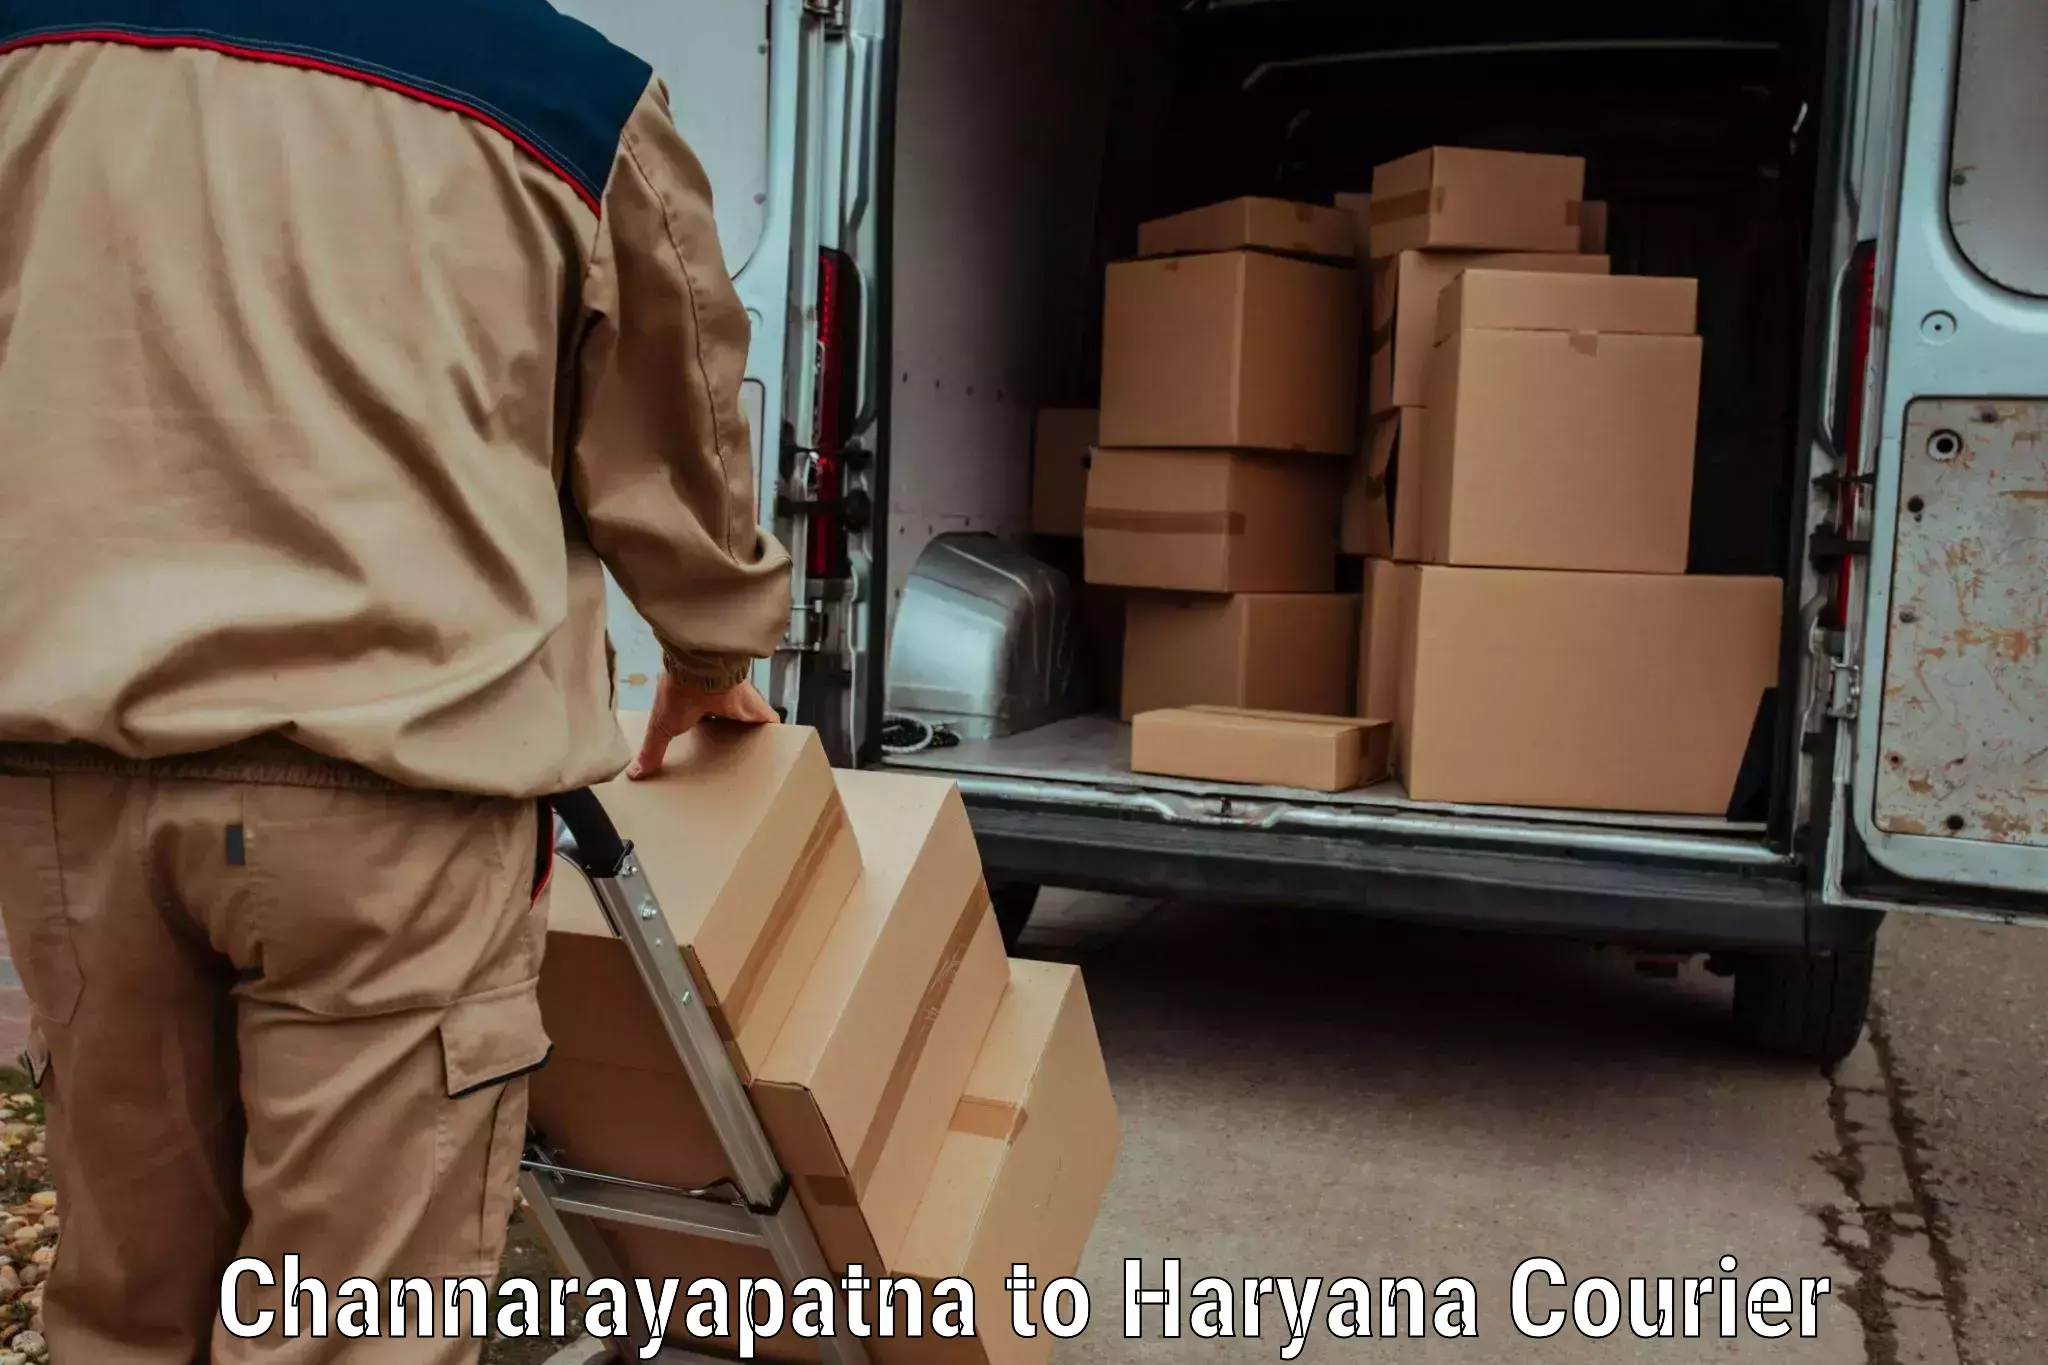 Courier service efficiency Channarayapatna to Pinjore